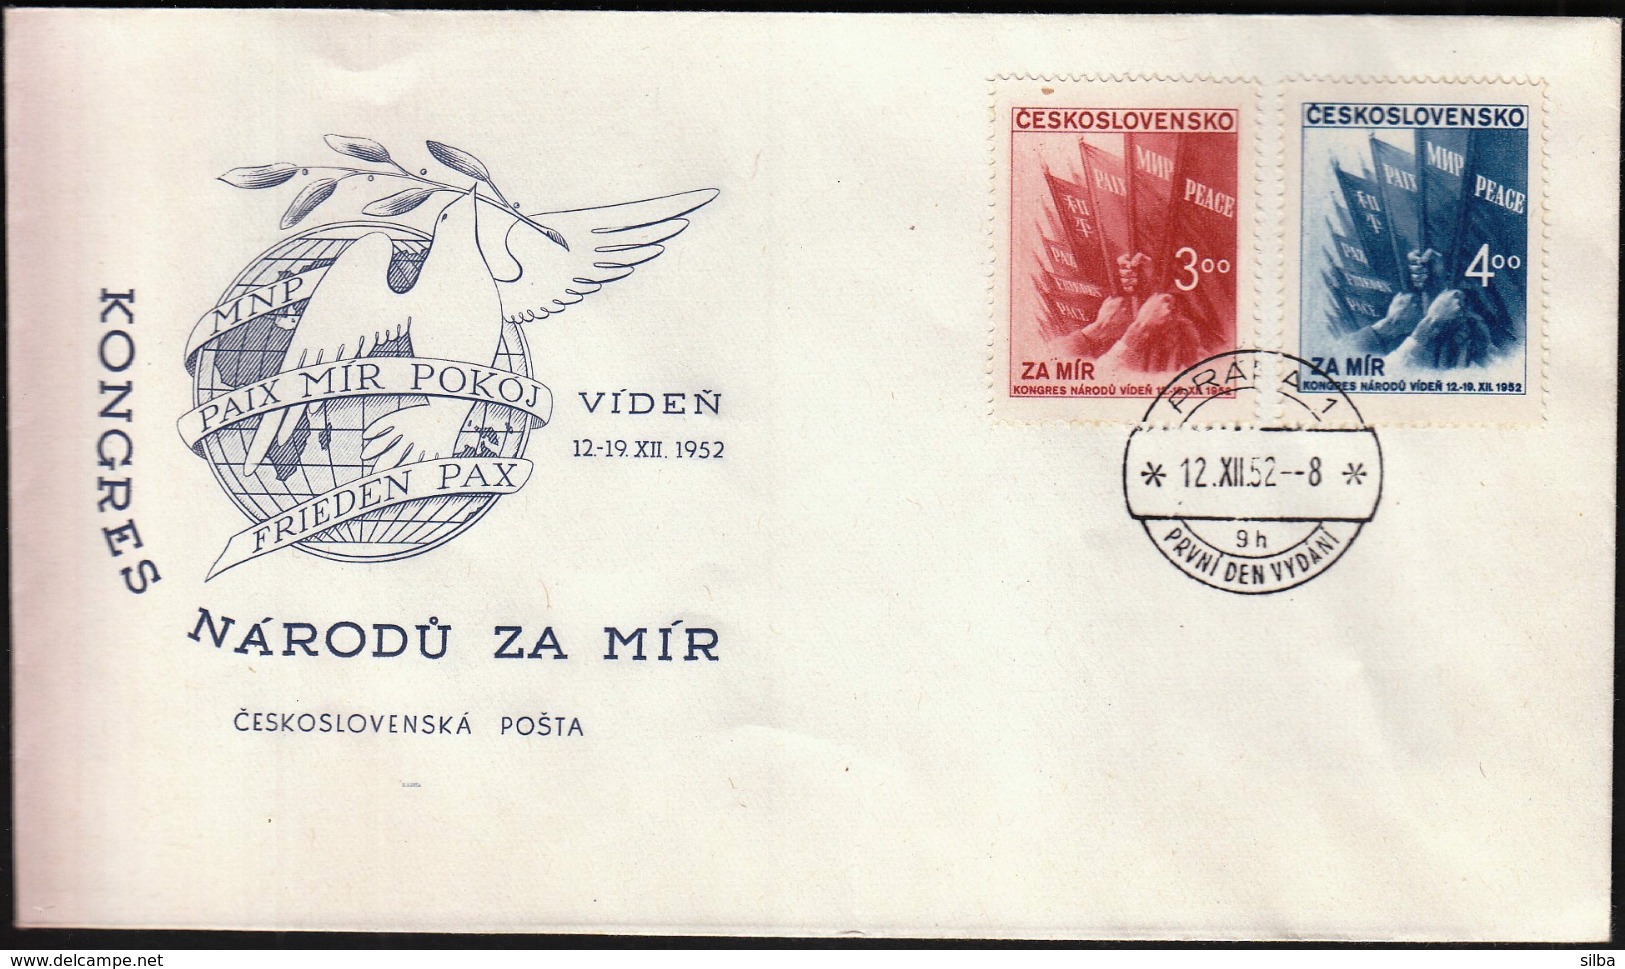 Czechoslovakia 1952 / 6 x FDC / Army / Philatelic Exhibition / Politics / Red Cross / Mik Ales History / Peace